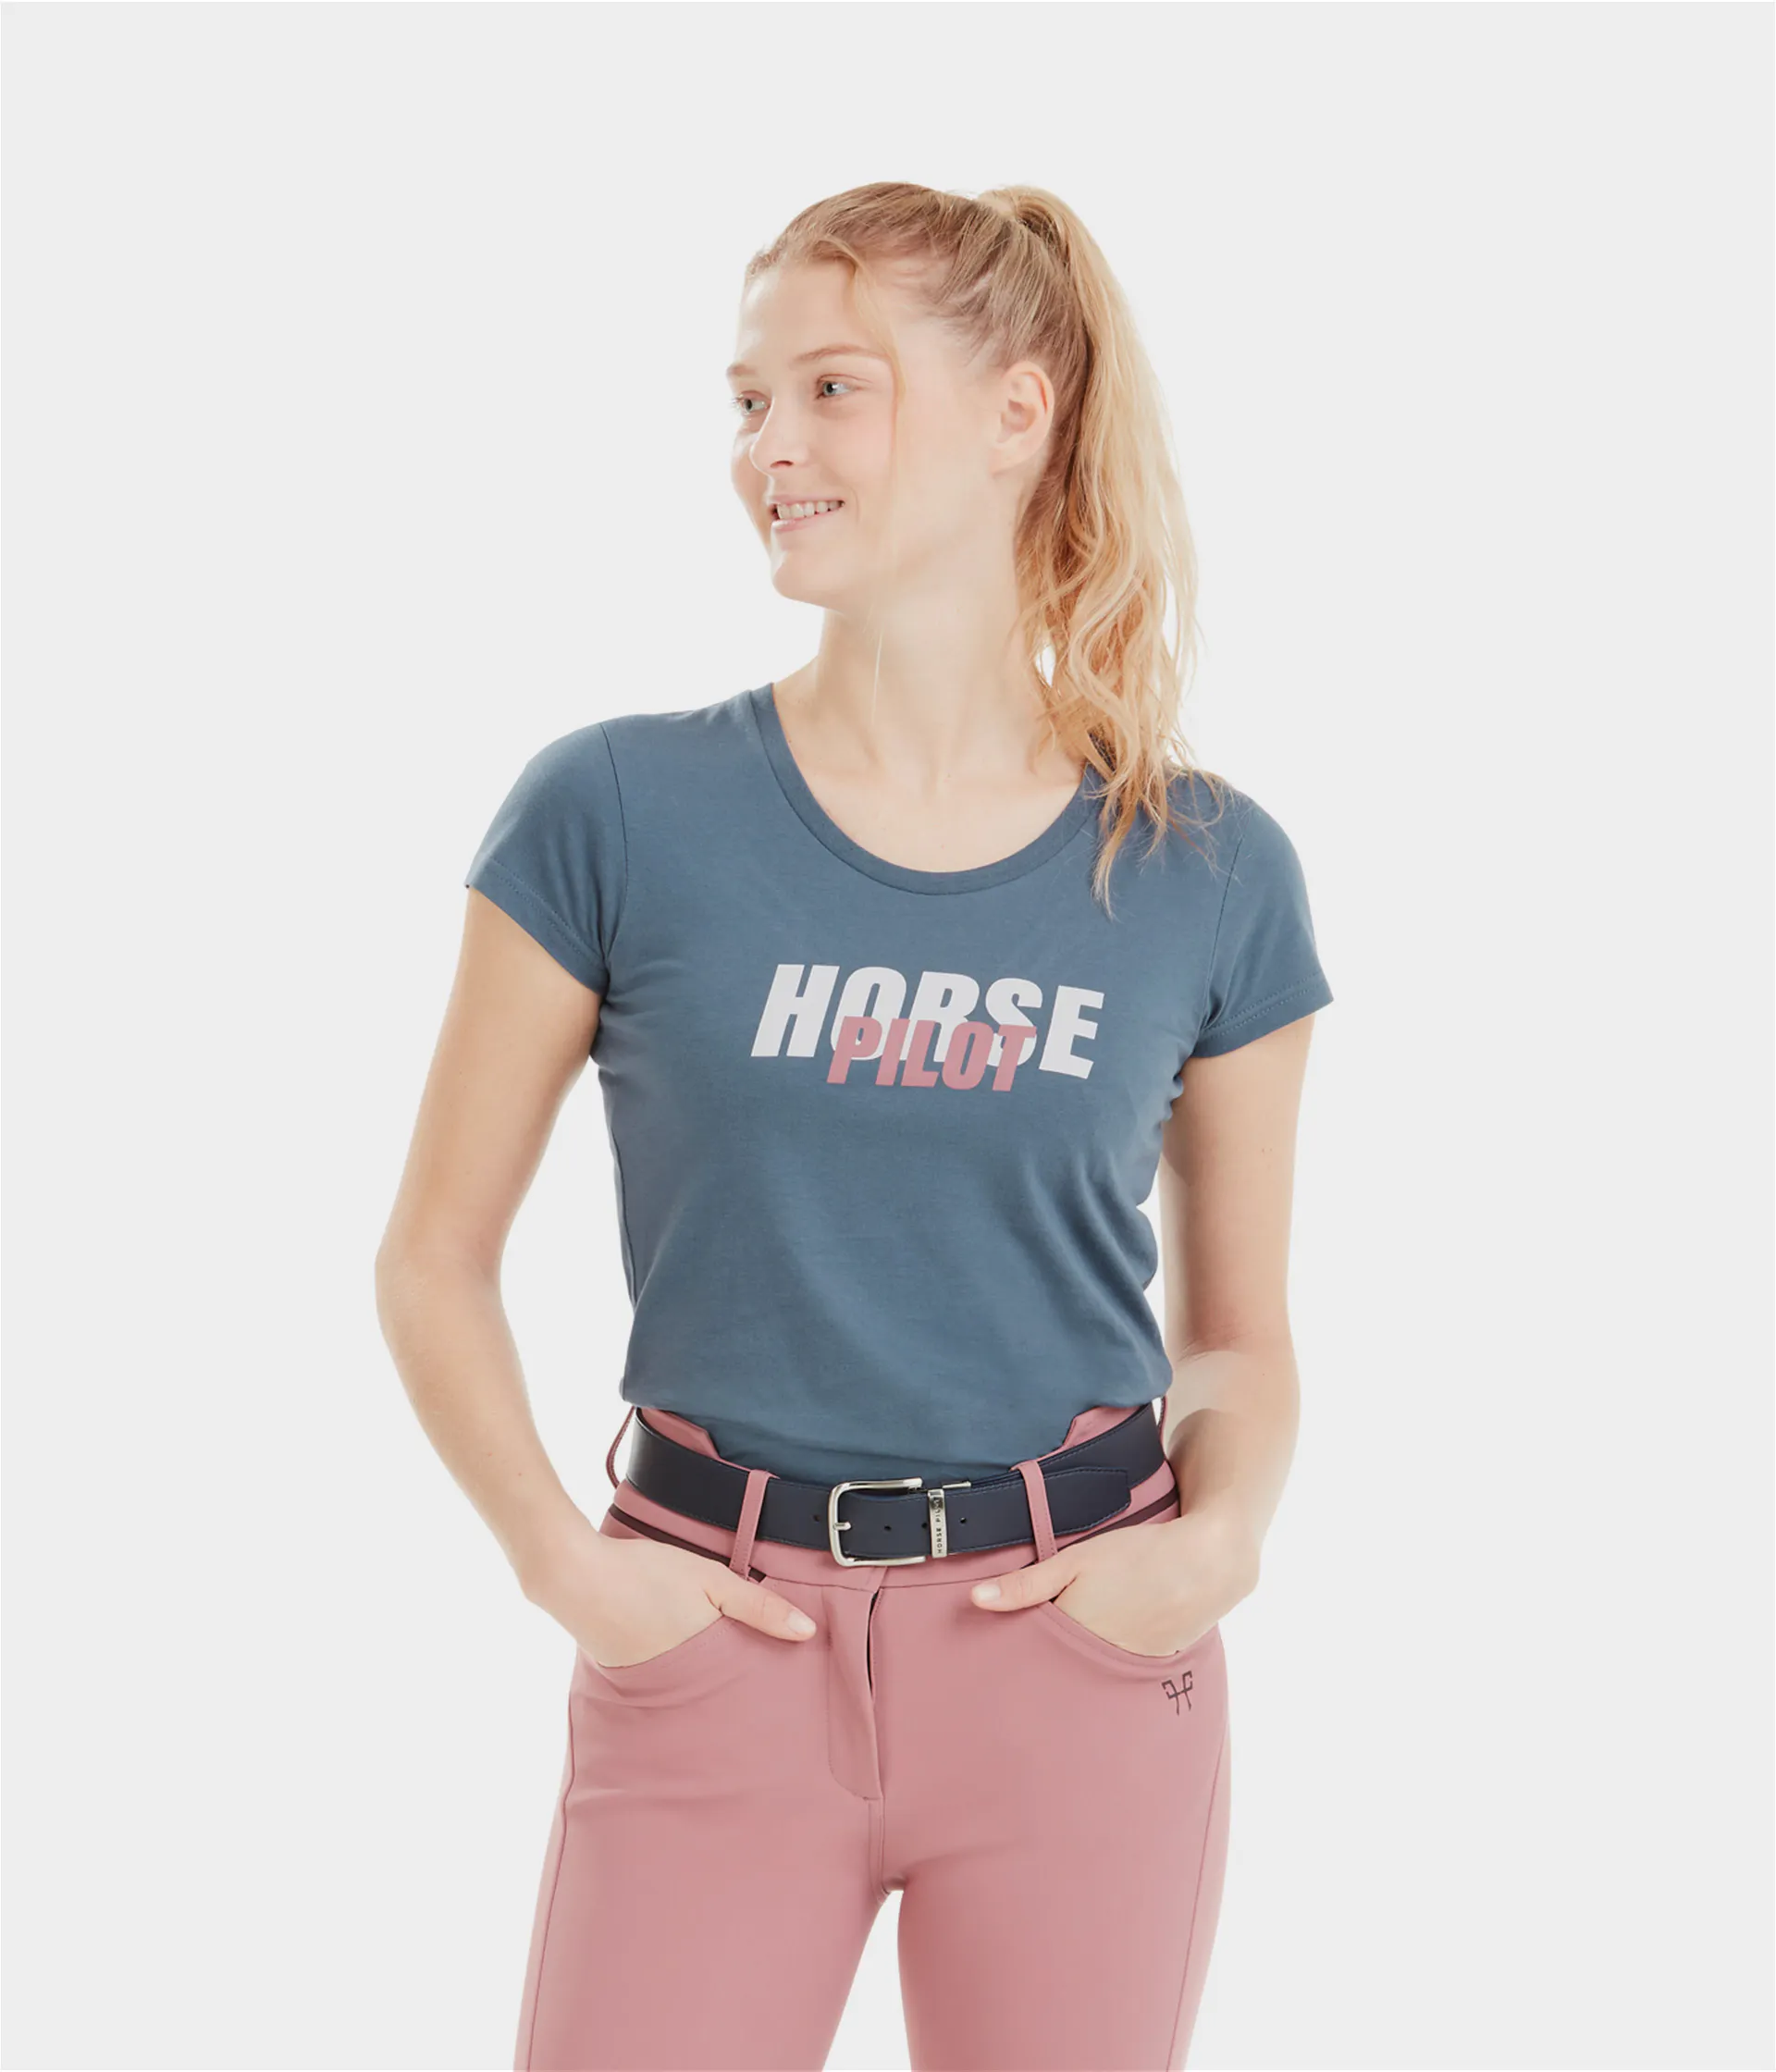 tee-shirt équitation femme horse pilot team couleur indigo